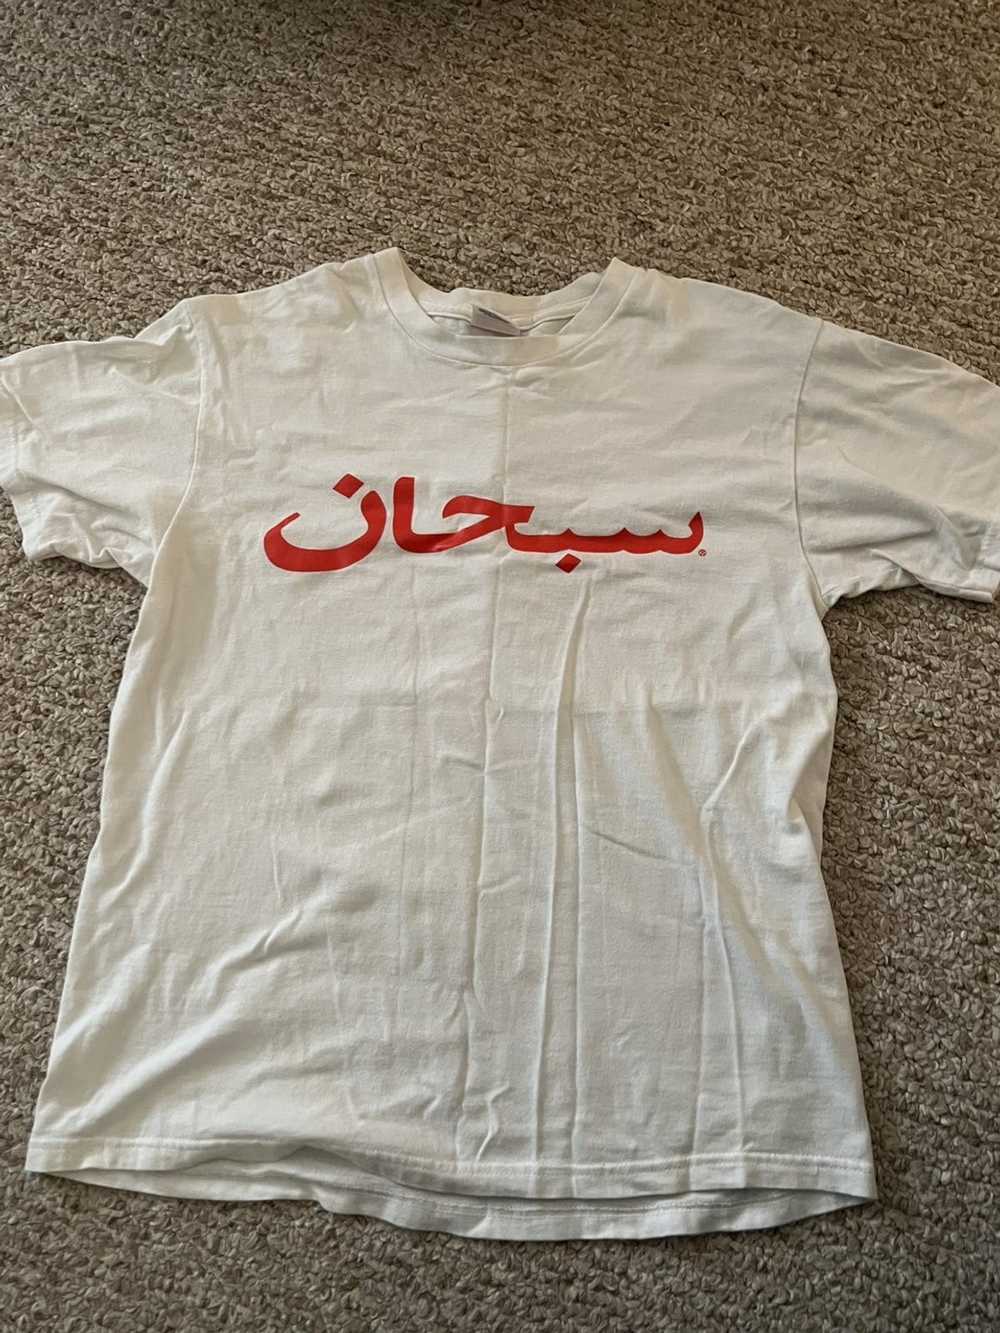 Supreme Supreme Arabic t shirt - image 1